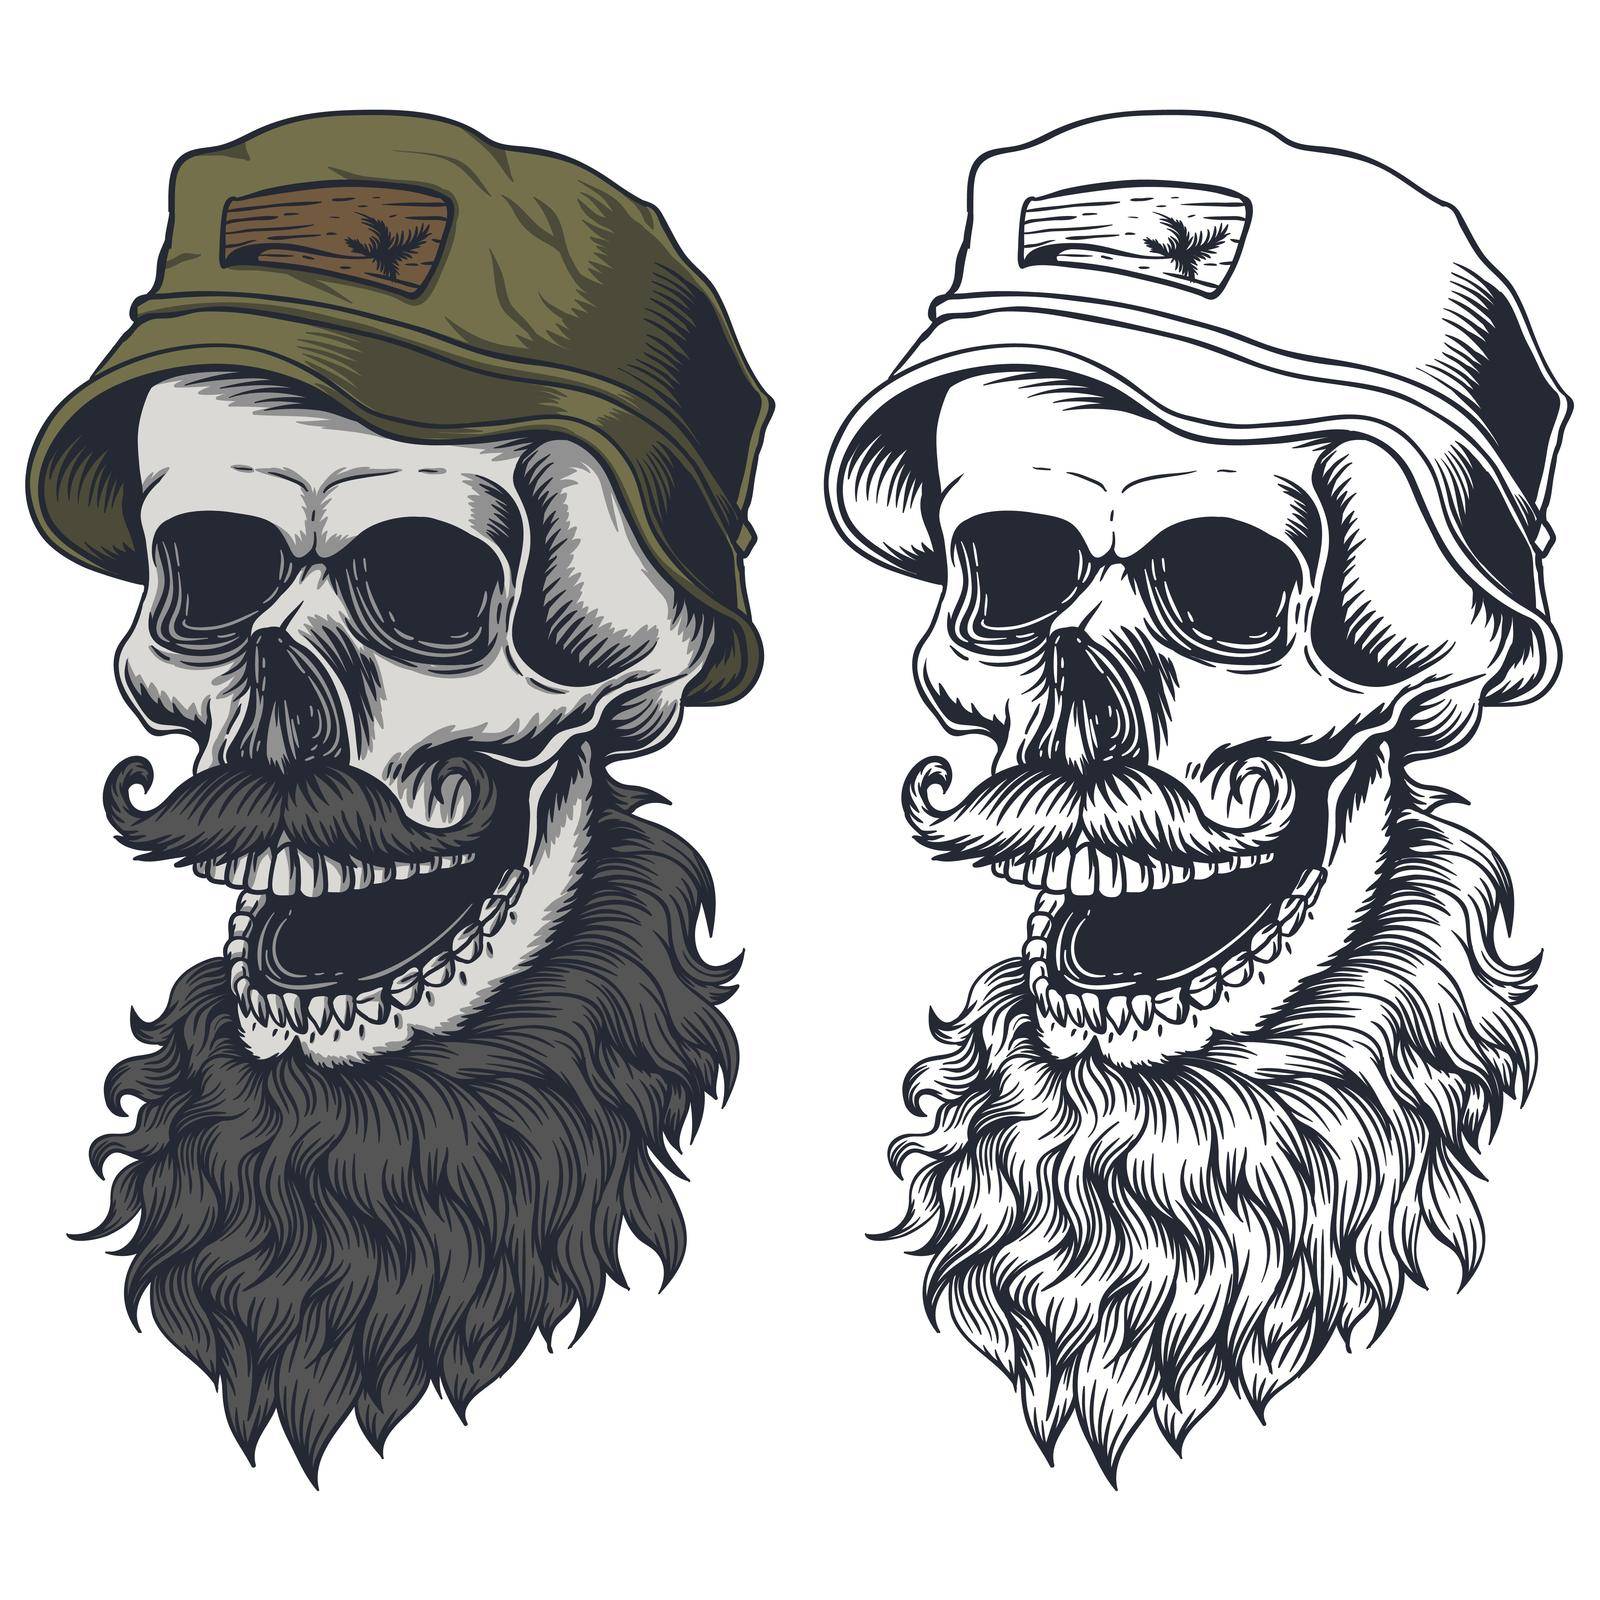 Skull beard mustache wear hat vector illustration by andypp